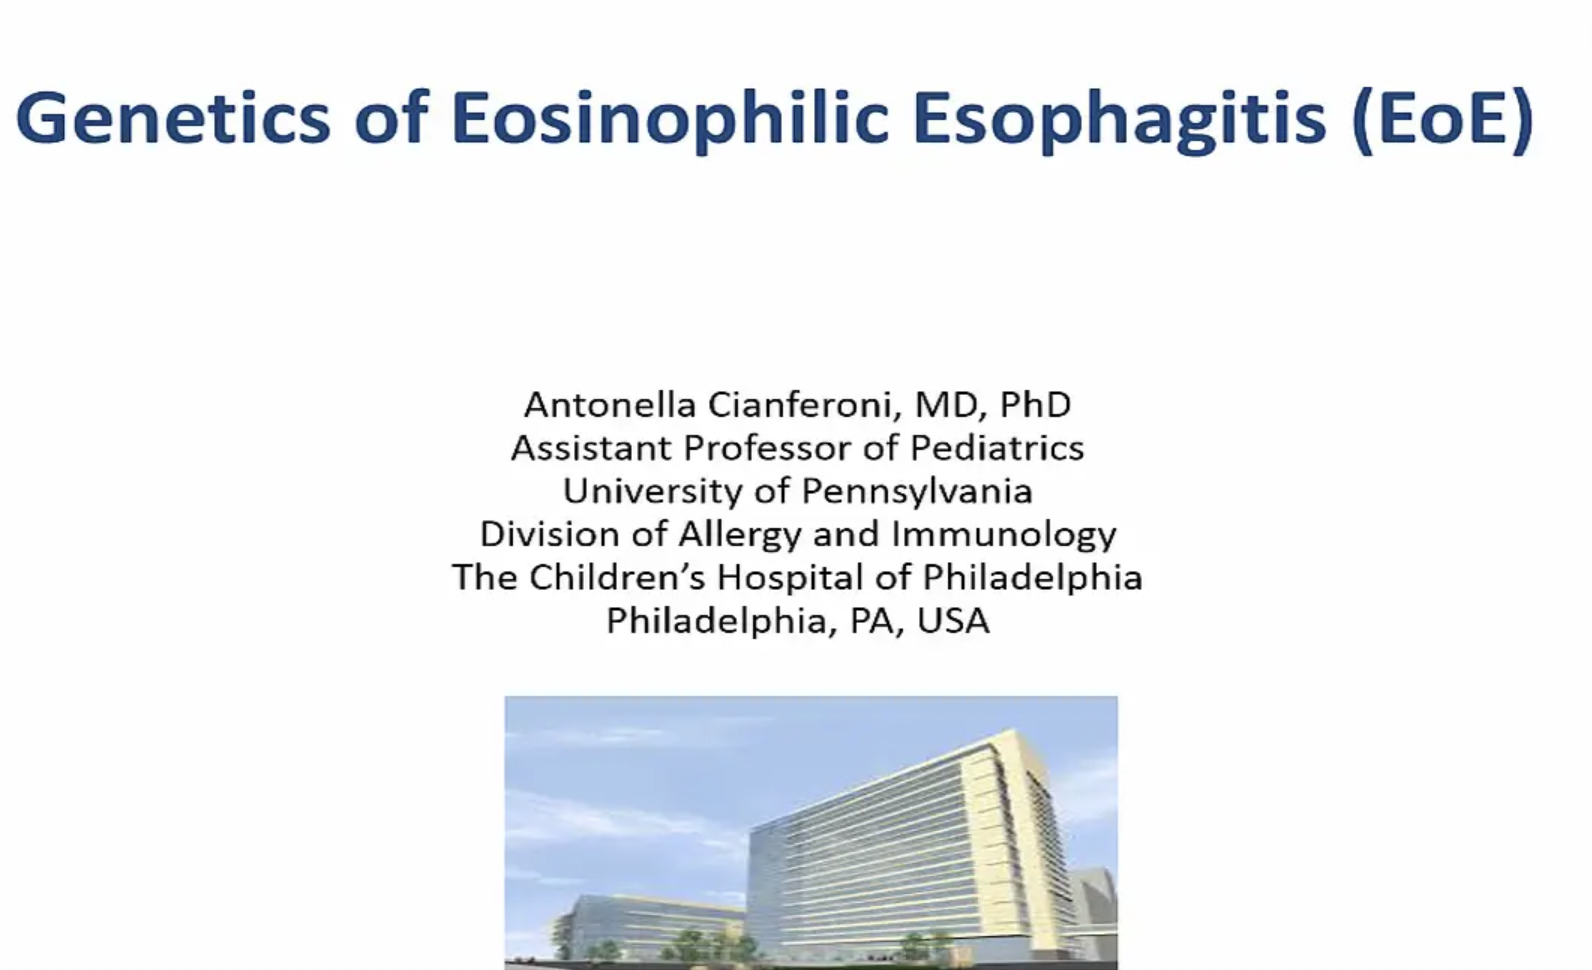 Screenshot of "Genetics of Eosinophilic Esophagitis (EoE)" video